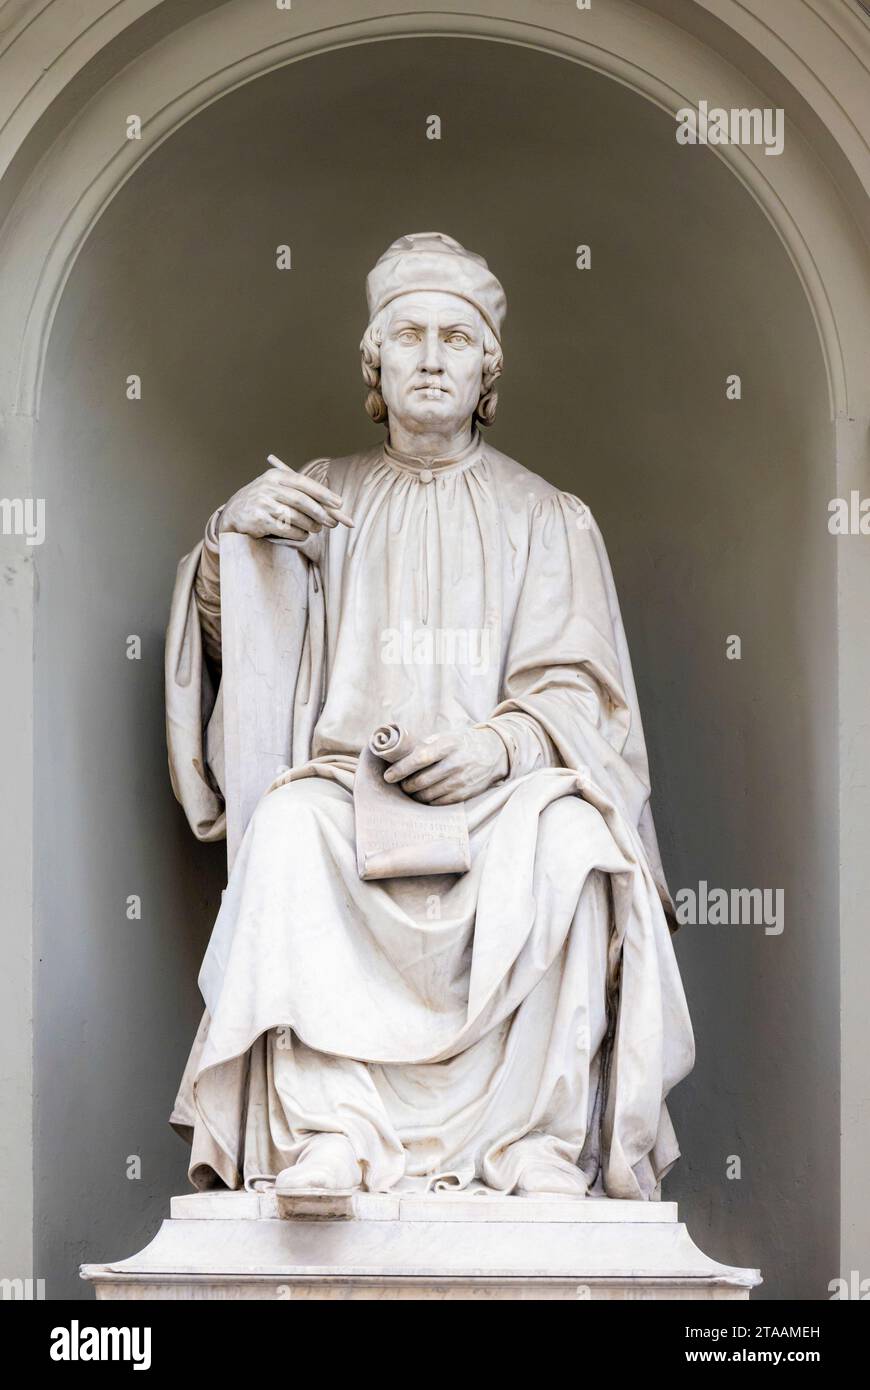 Statua di Filippo Brunelleschi, Firenze, Toscana, Italia Foto Stock